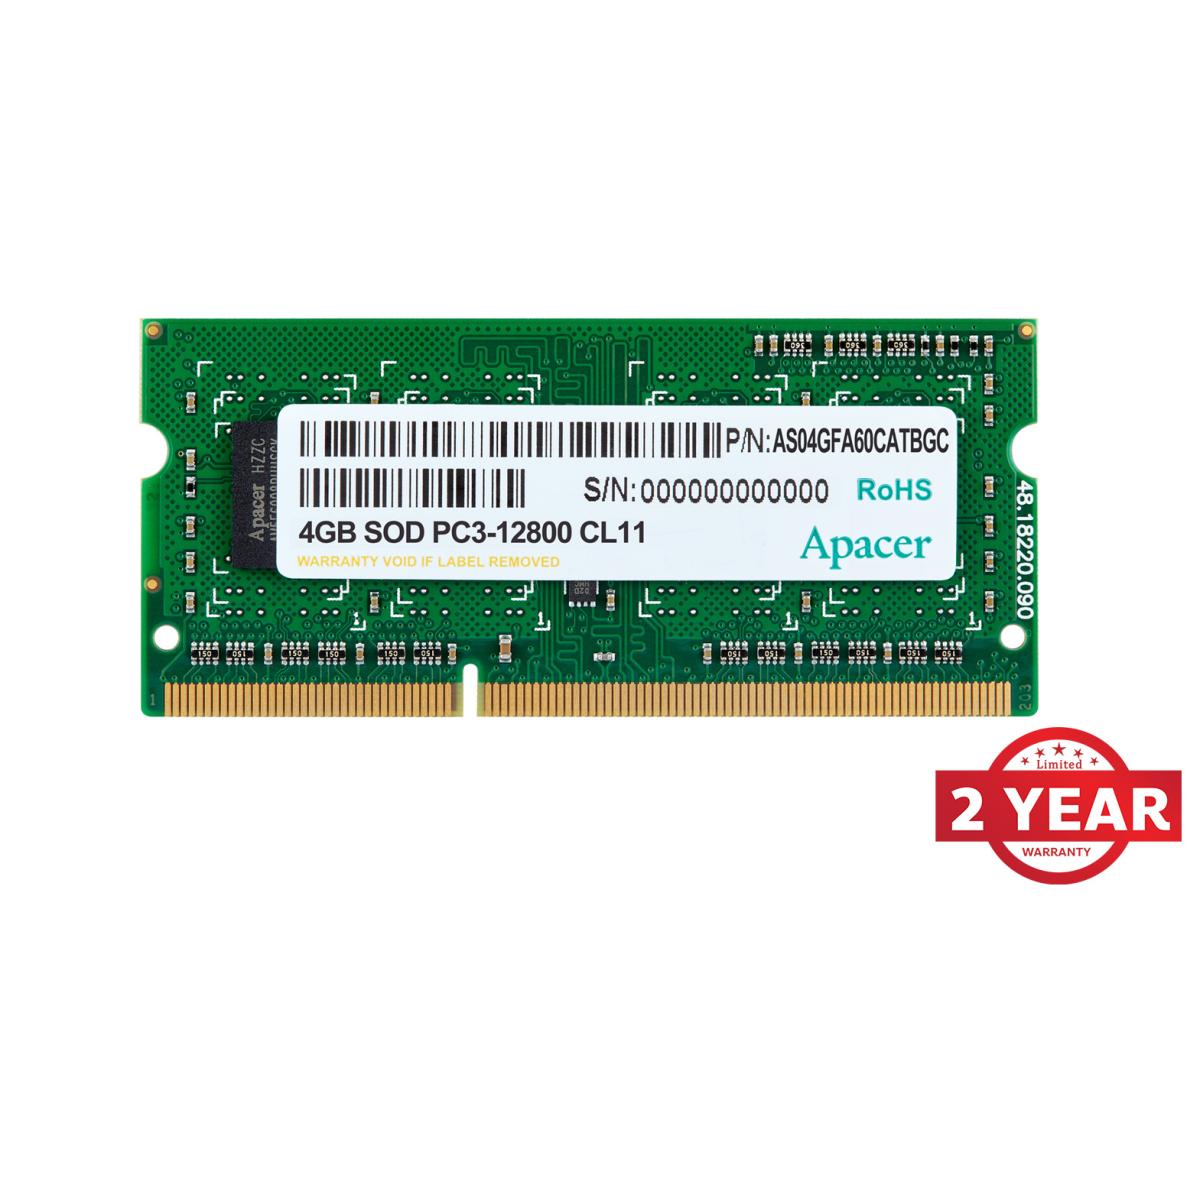 Apacer RAM SO-DIMM Notebook DDR3L 1600Mhz 4GB RAM 1.5V